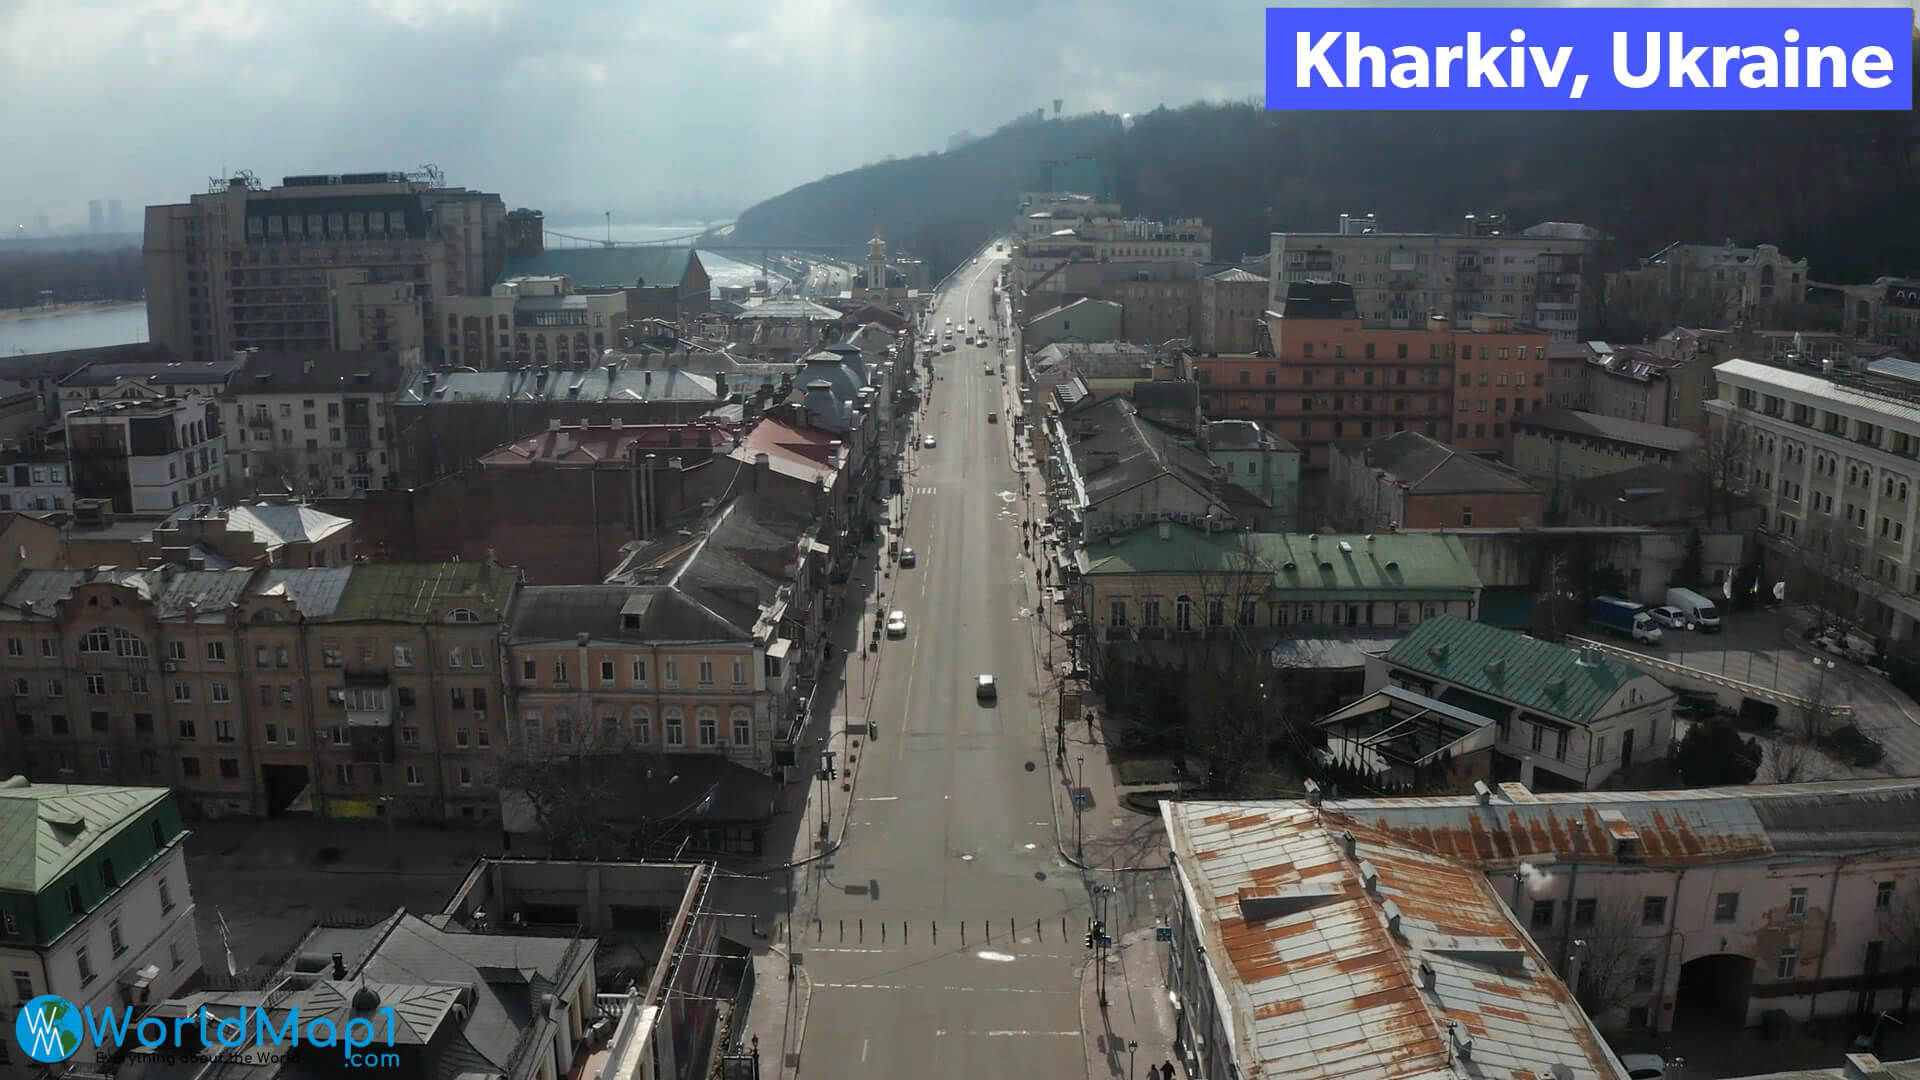 Kharkiv Aerial View in Ukraine